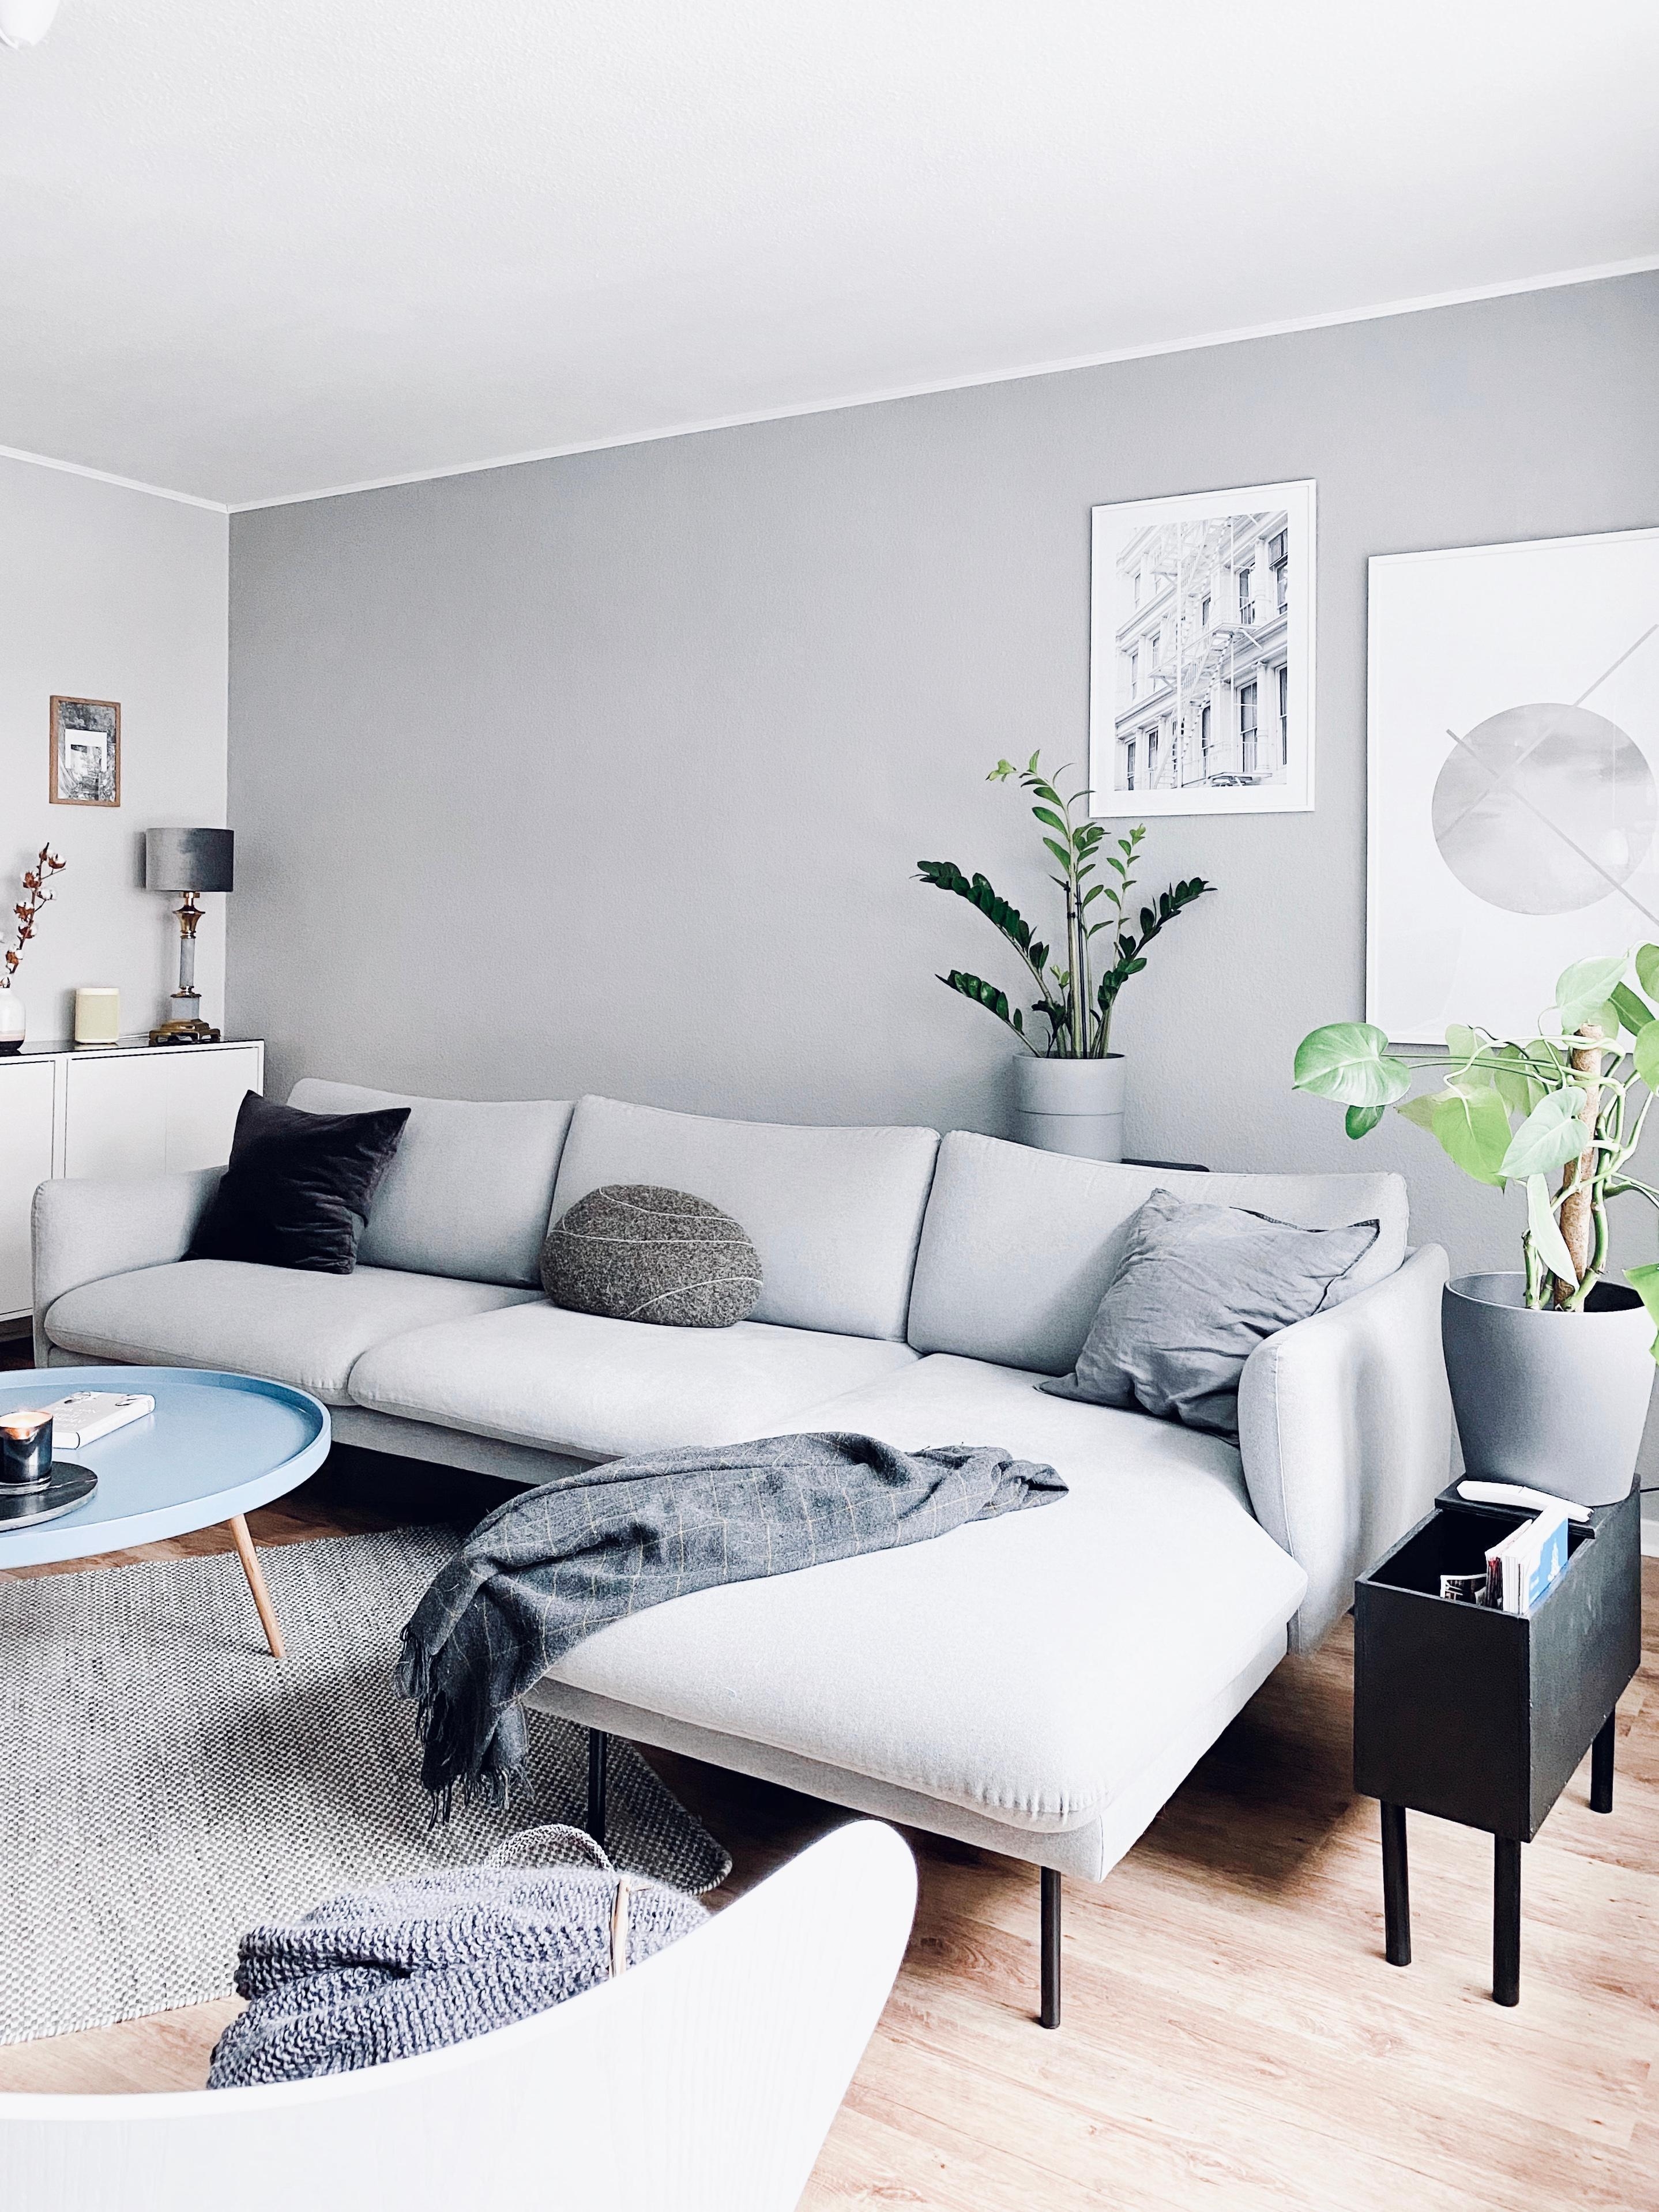 #livingroom #nordichome #hygge #plantlover #minimalism #monochrome